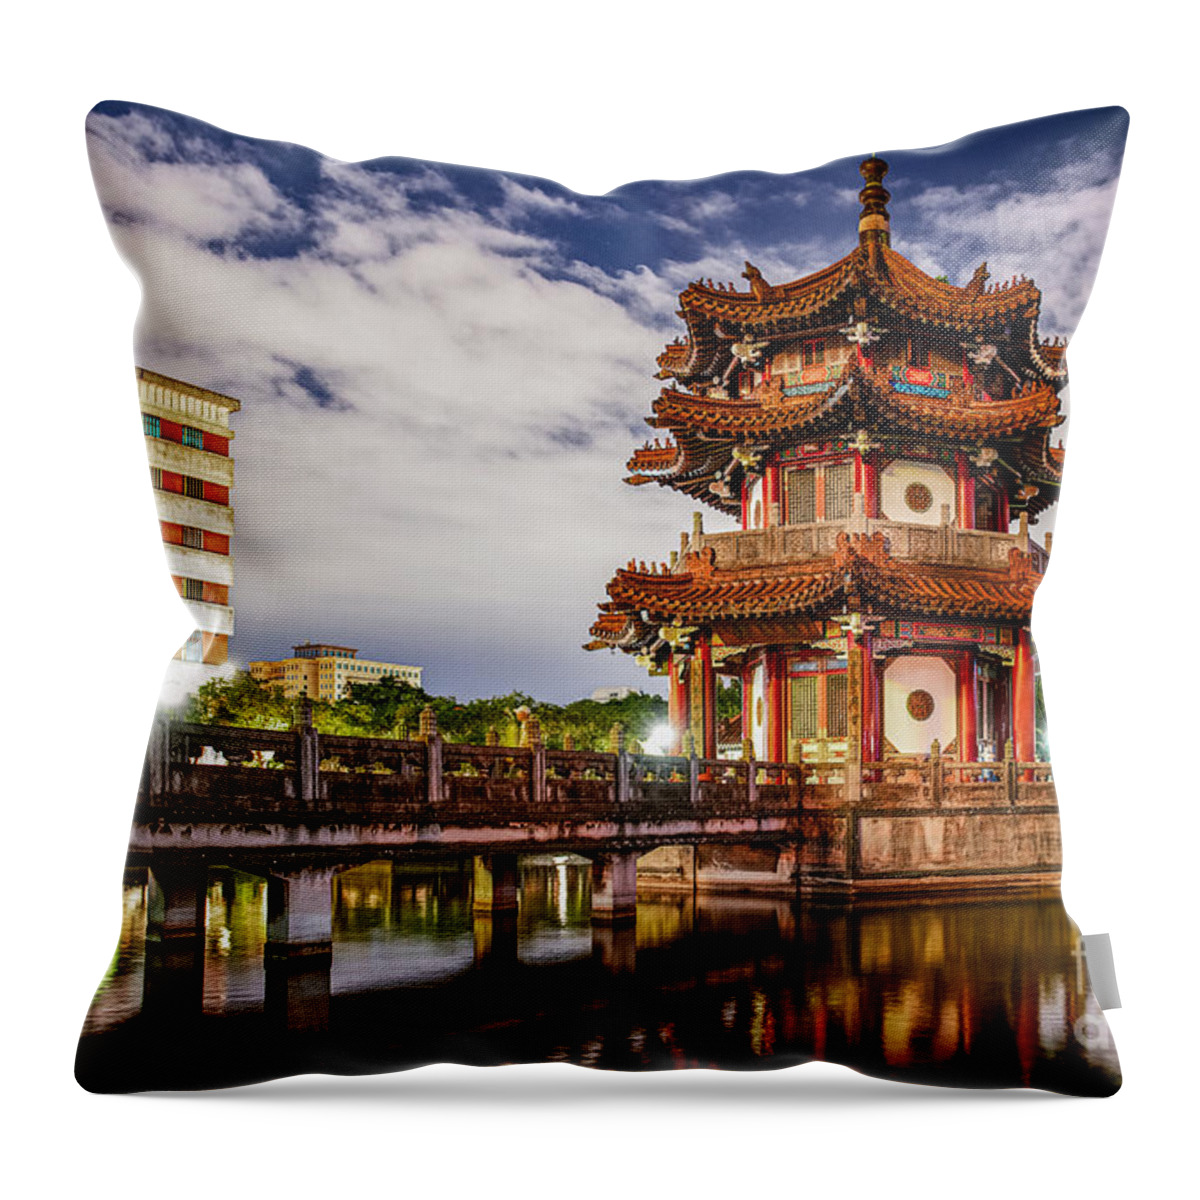 Pagoda Throw Pillow featuring the photograph Pagoda At National Taiwan Museum by Traveler's Pics